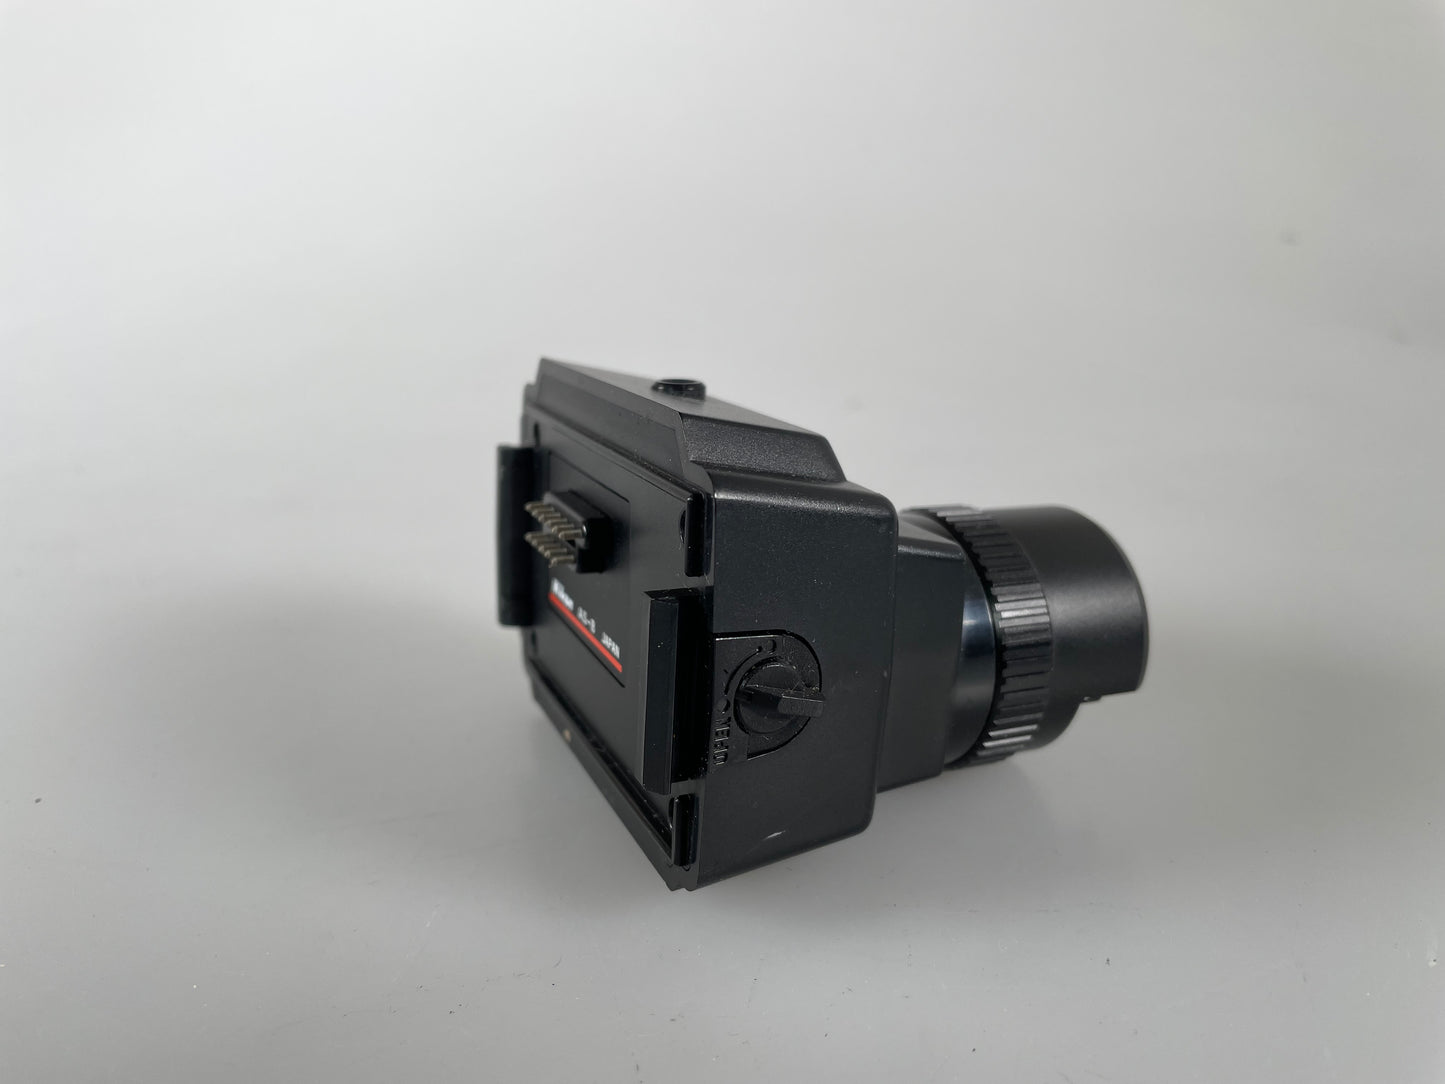 Nikon AS-8 Flash Adapter for SB-16 on F3